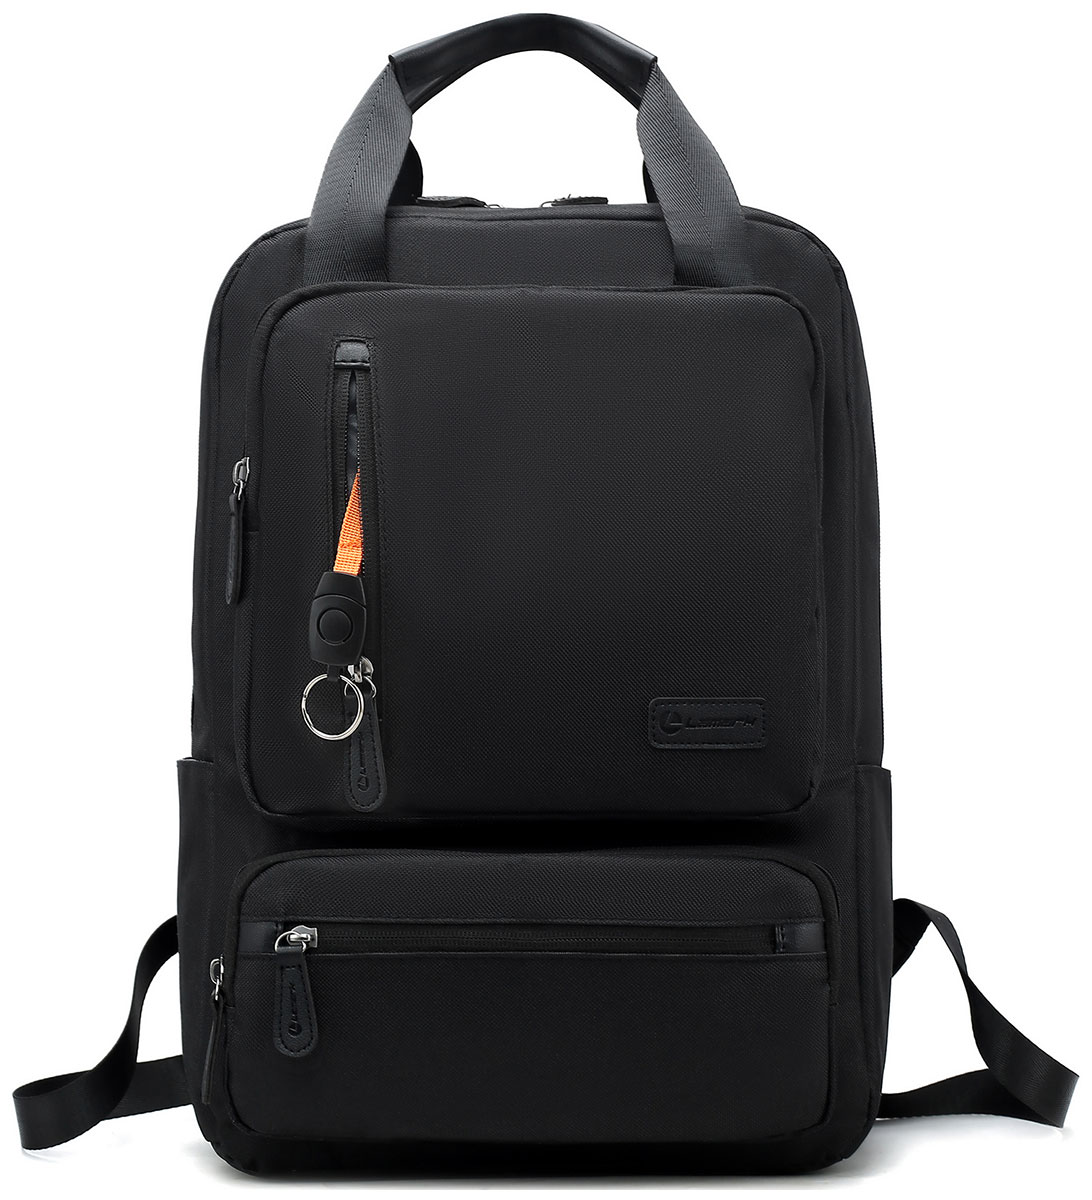 Рюкзак для ноутбука Lamark 15.6'' B175 Black